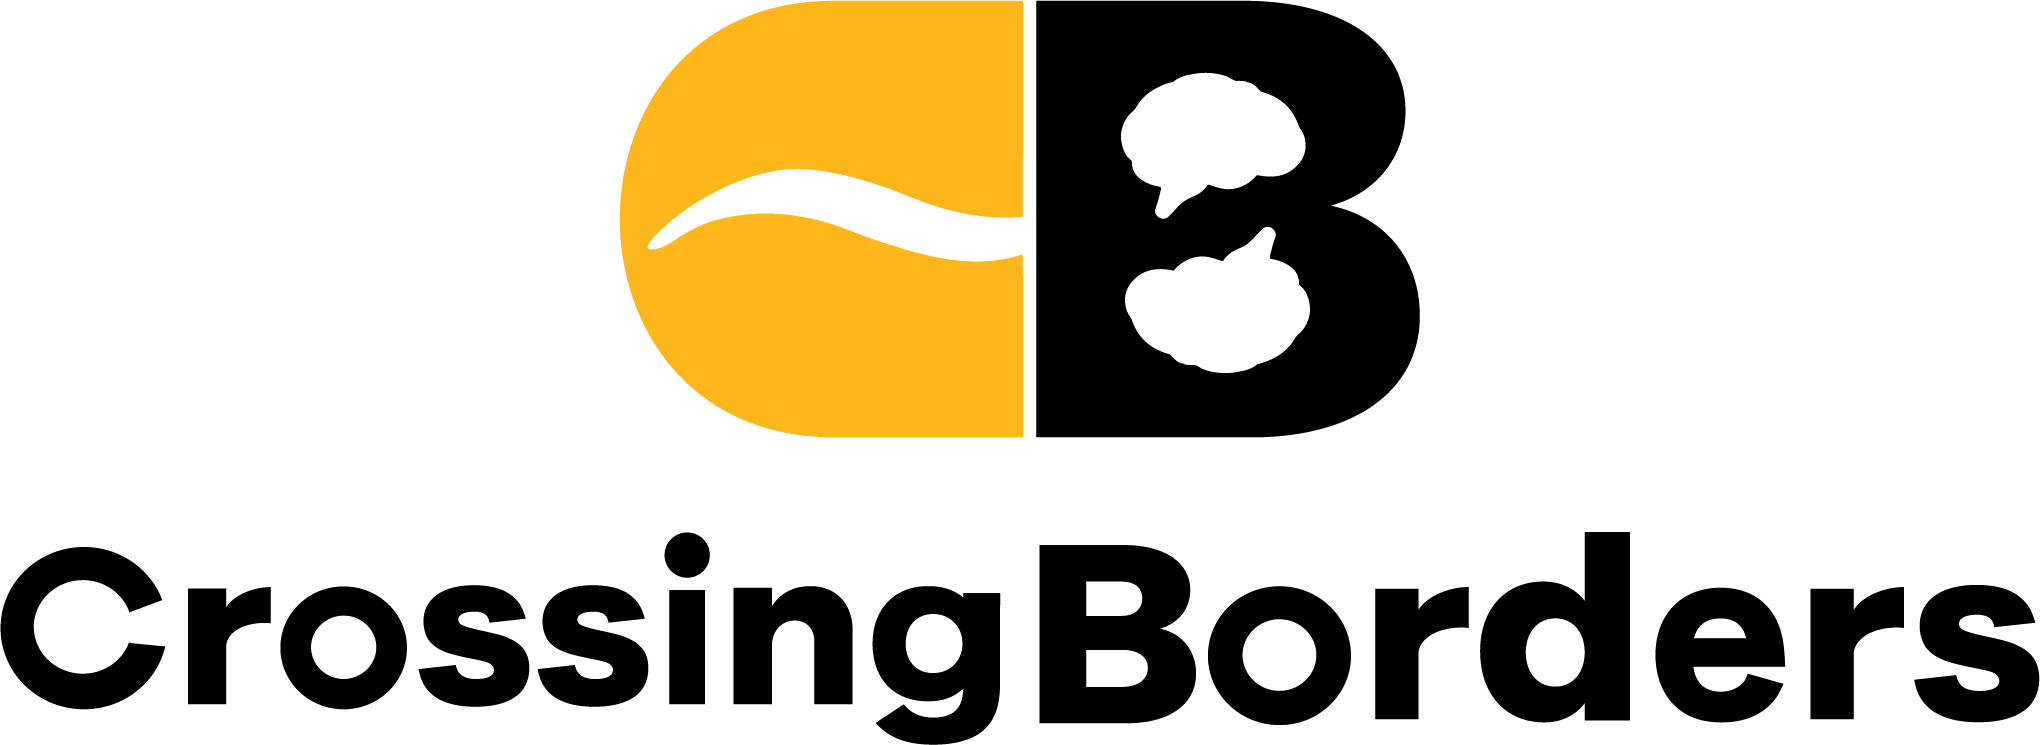 Borders Logo - Crossing Borders – Promoting intercultural understanding